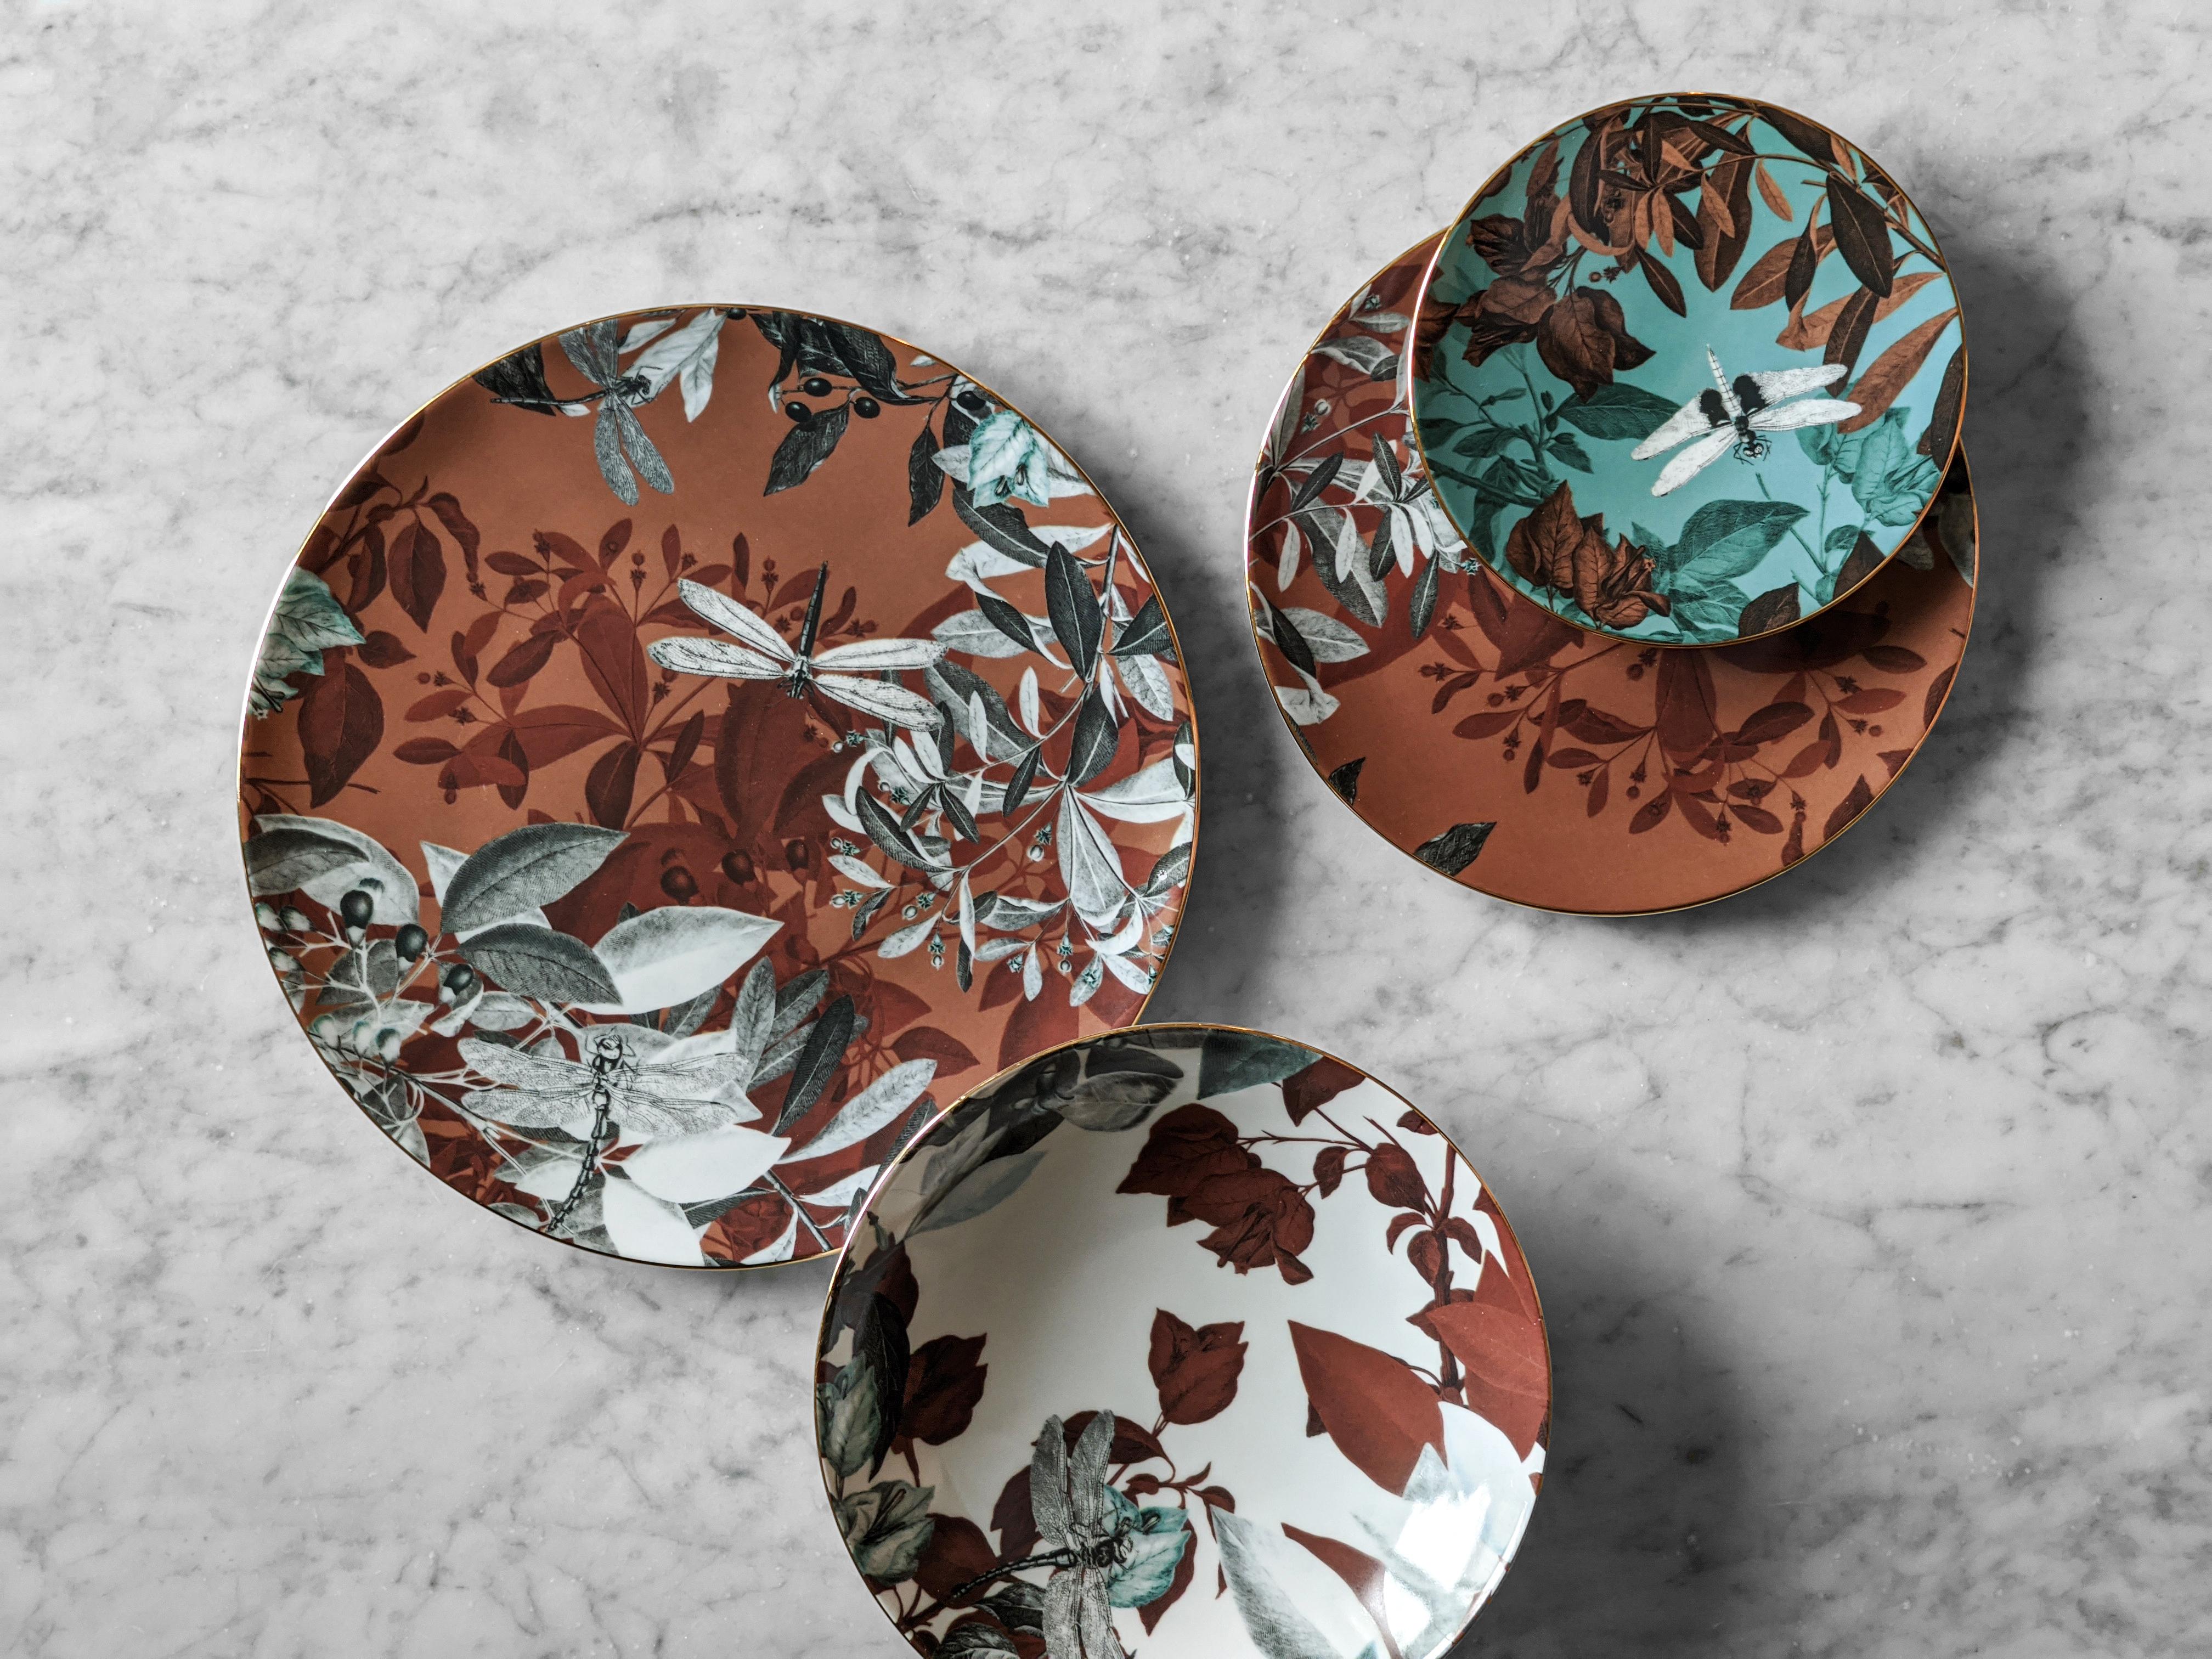 Black Dragon, Six Contemporary Porcelain Bread Plates with Decorative Design For Sale 3